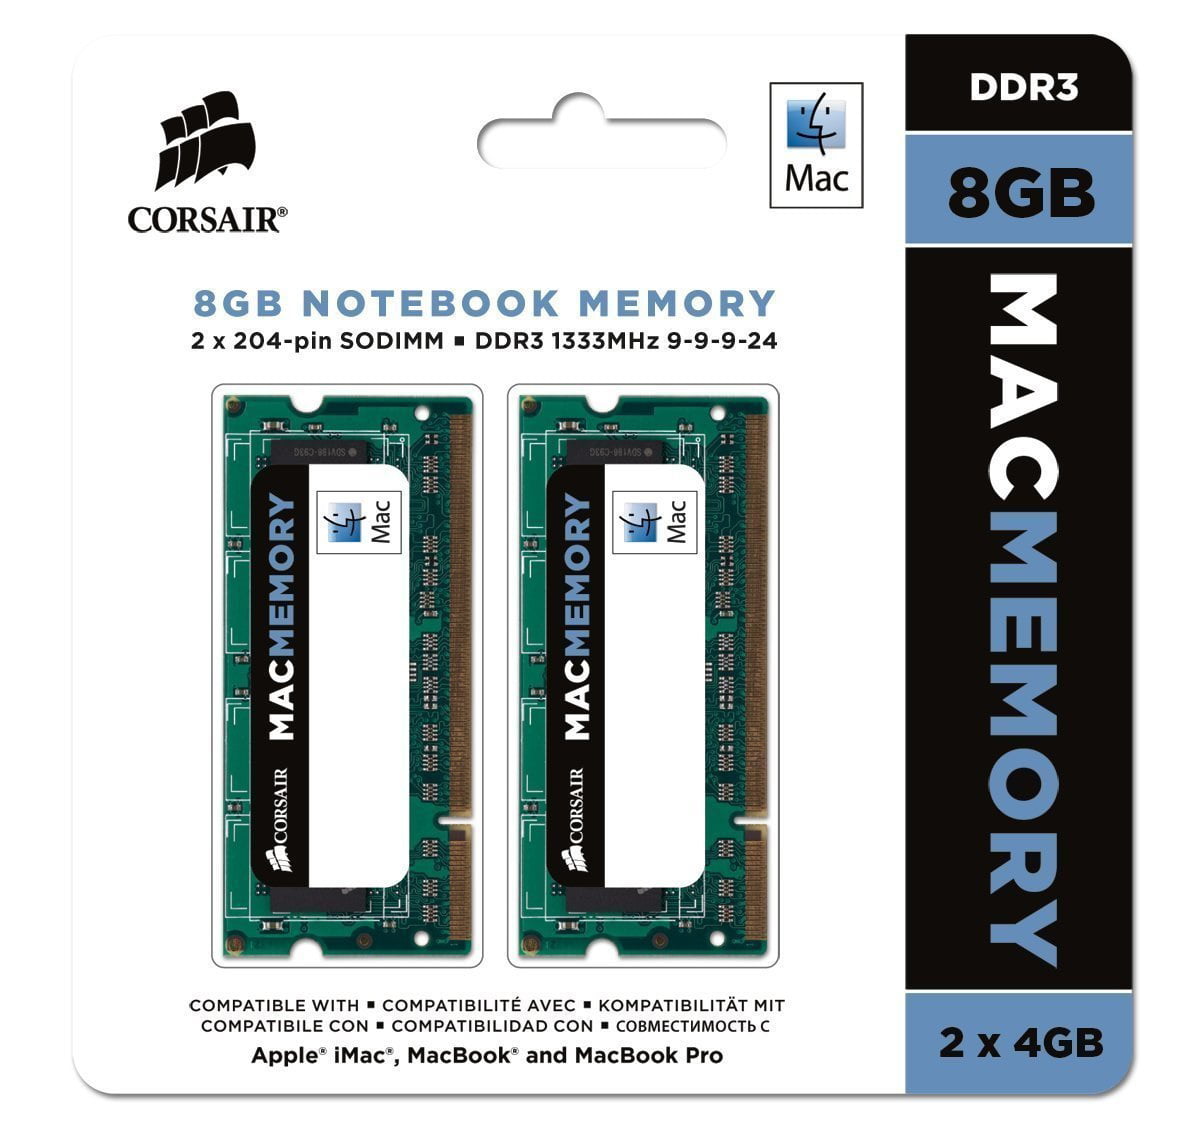 2x4GB 8GB DDR3 RAM Memory for Apple Mac Mini PC3-10600 DDR3 1333MHz SODIMM 